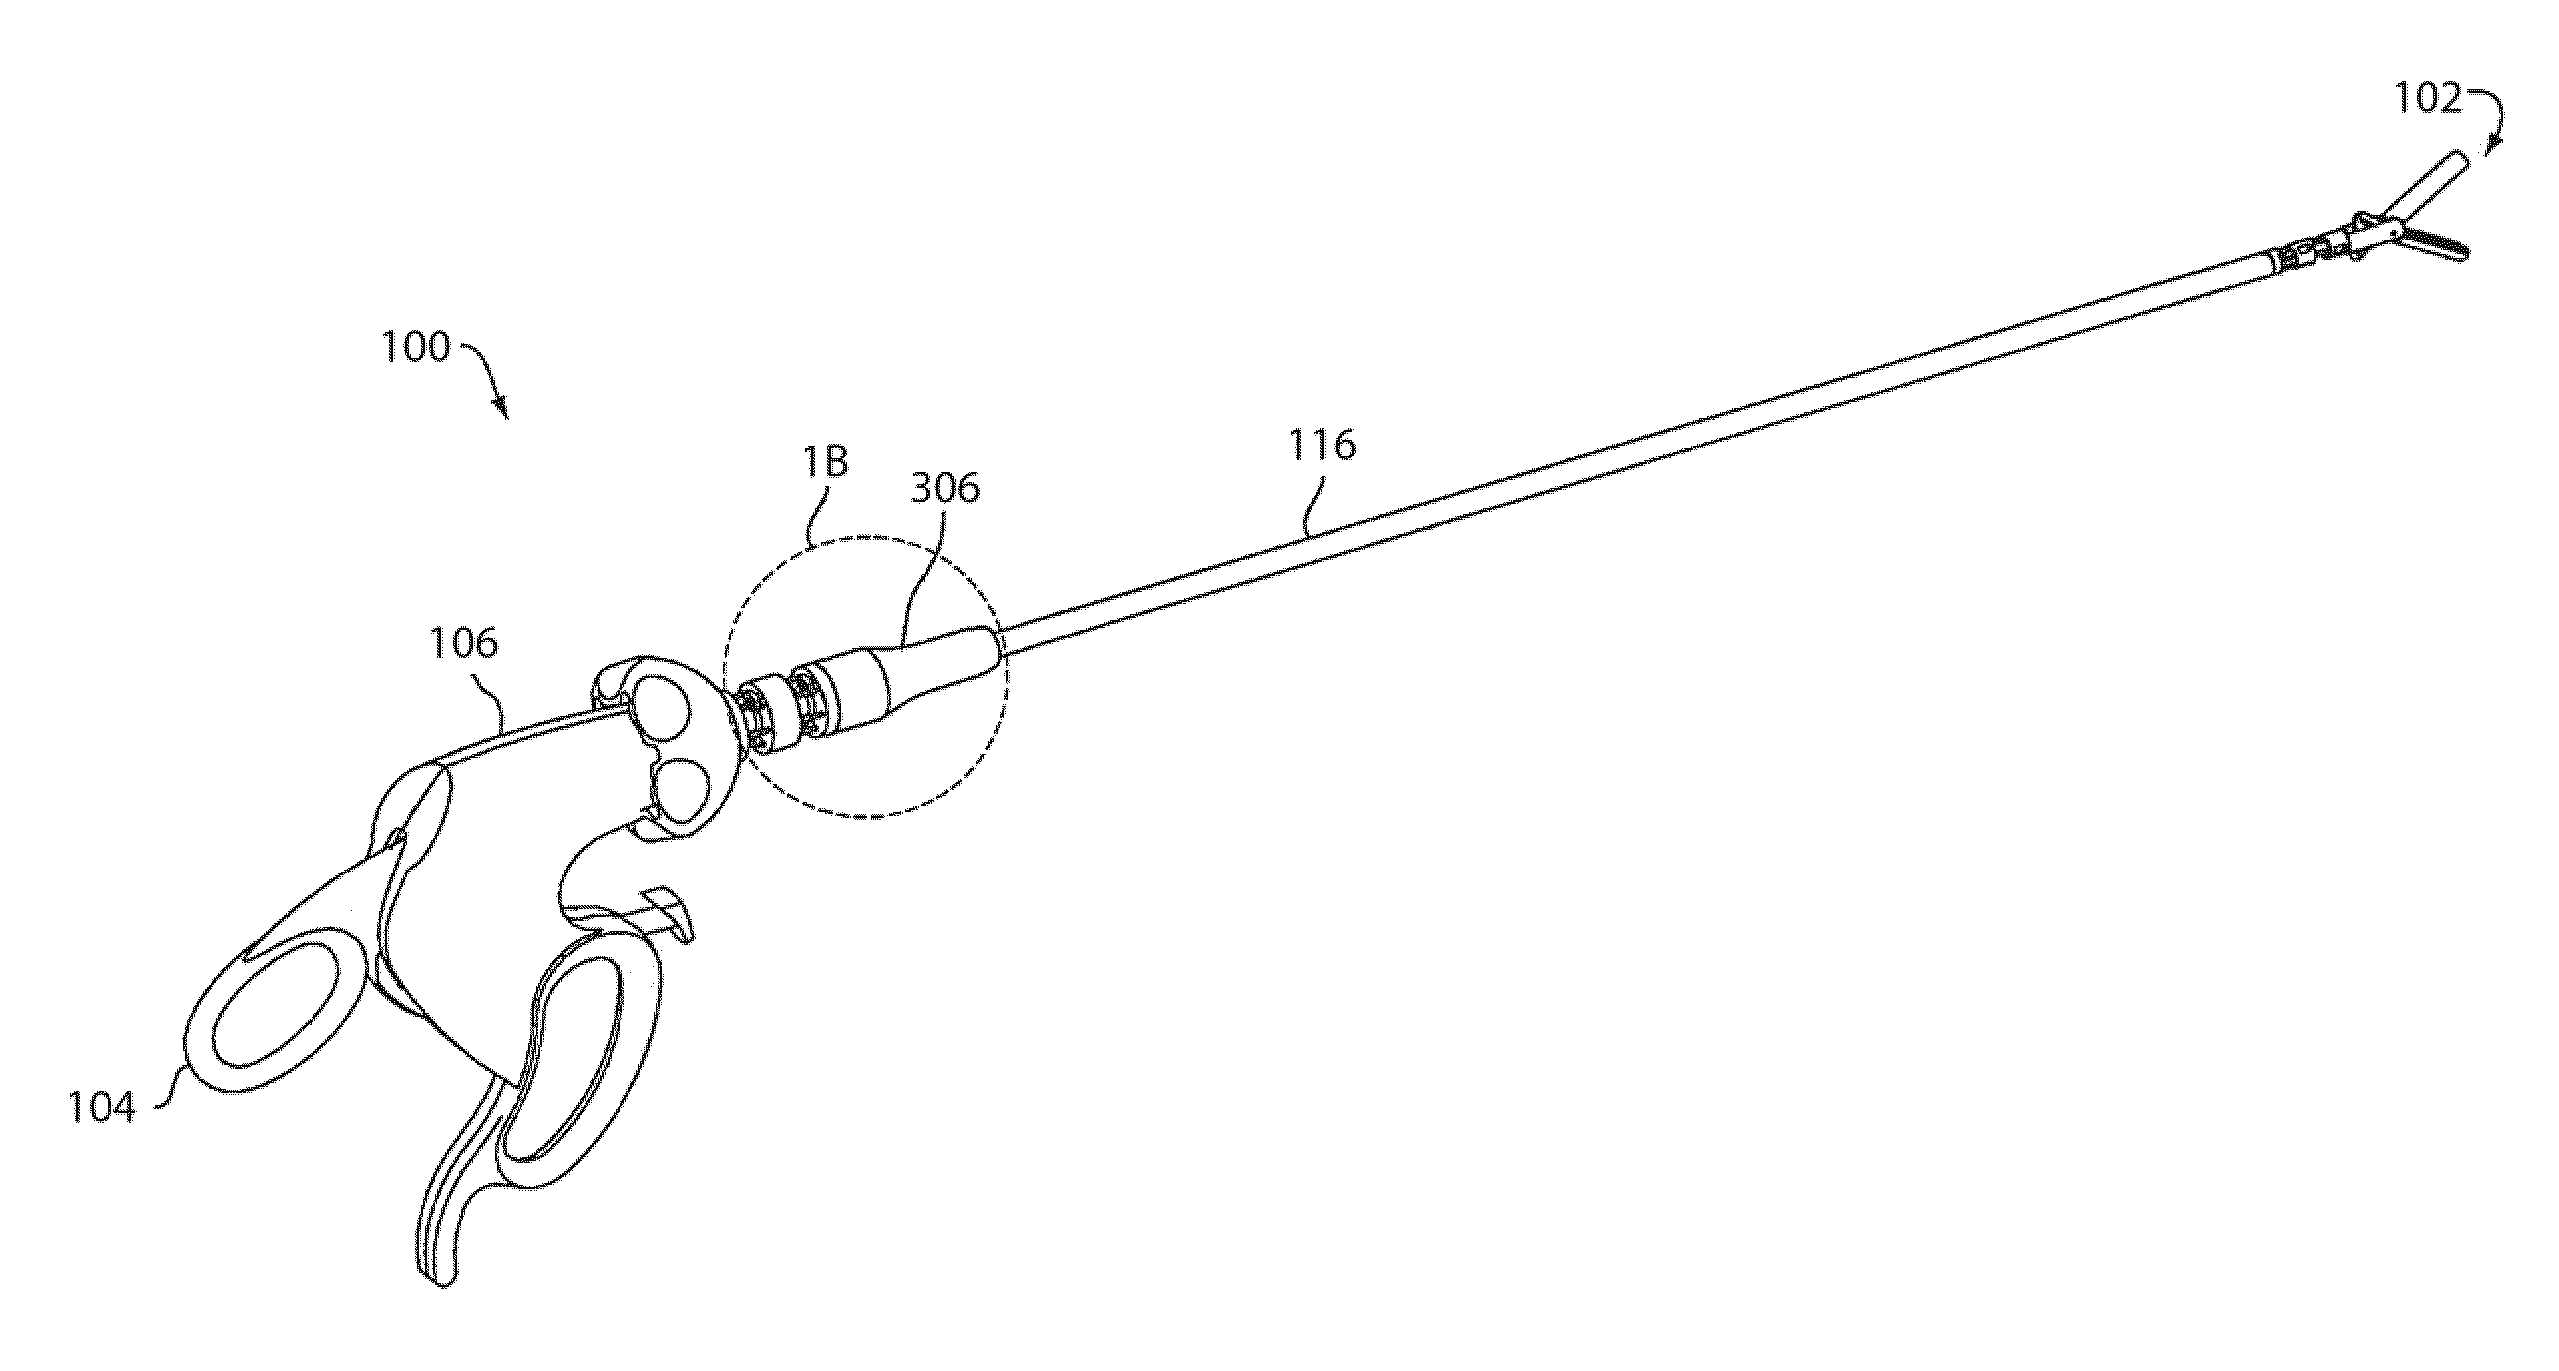 Instrument with articulation lock